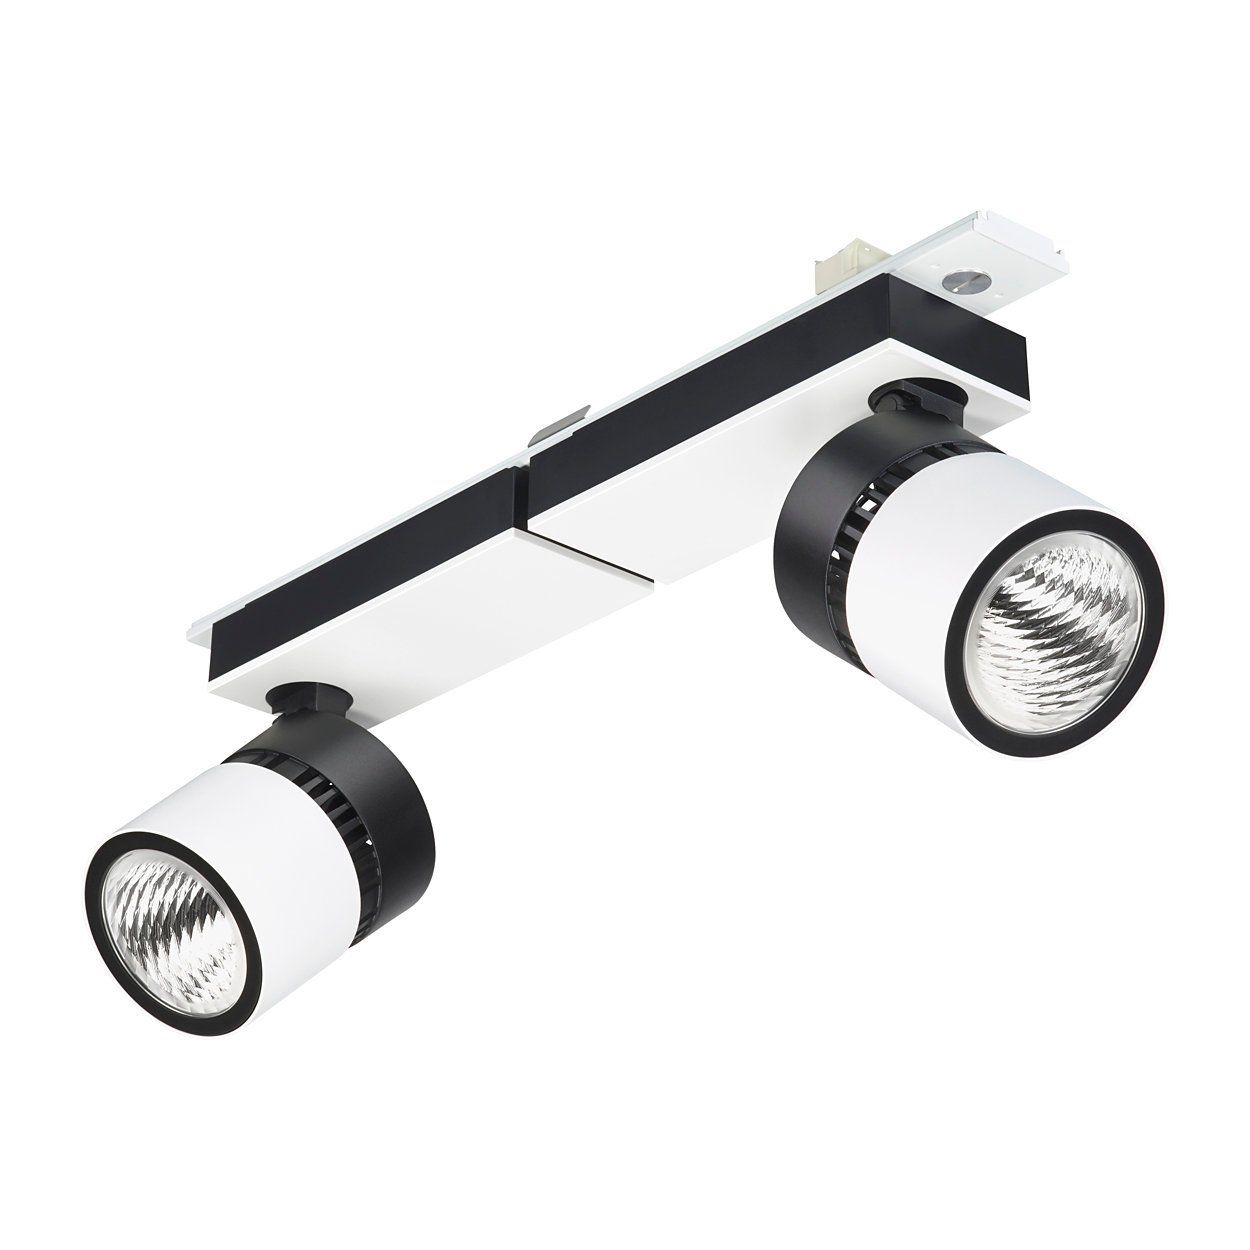 Maxos LED Spot Inserts – flexibility and style